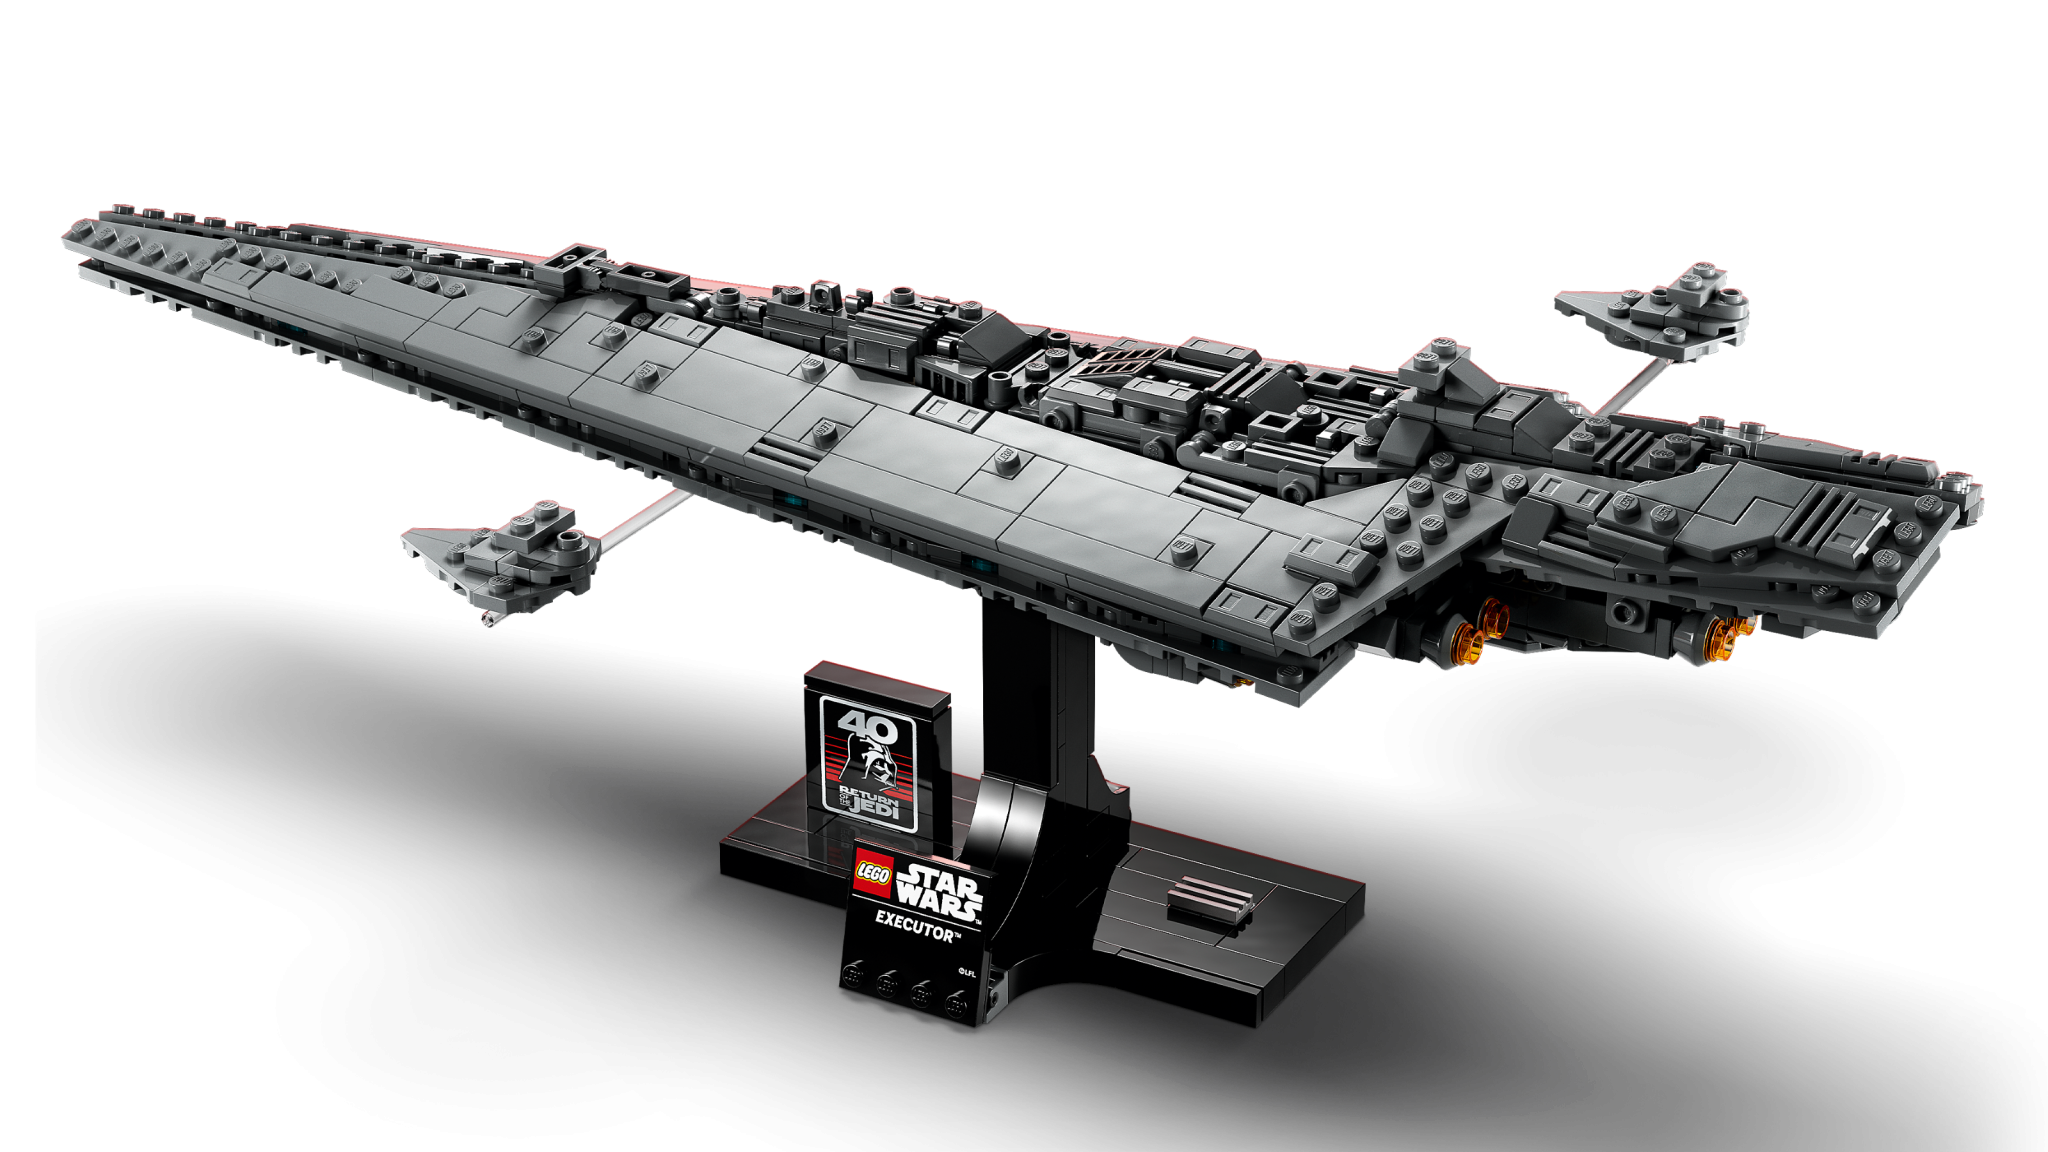 LEGO Star Wars 75356 Executor Super Star Destroyer revealed